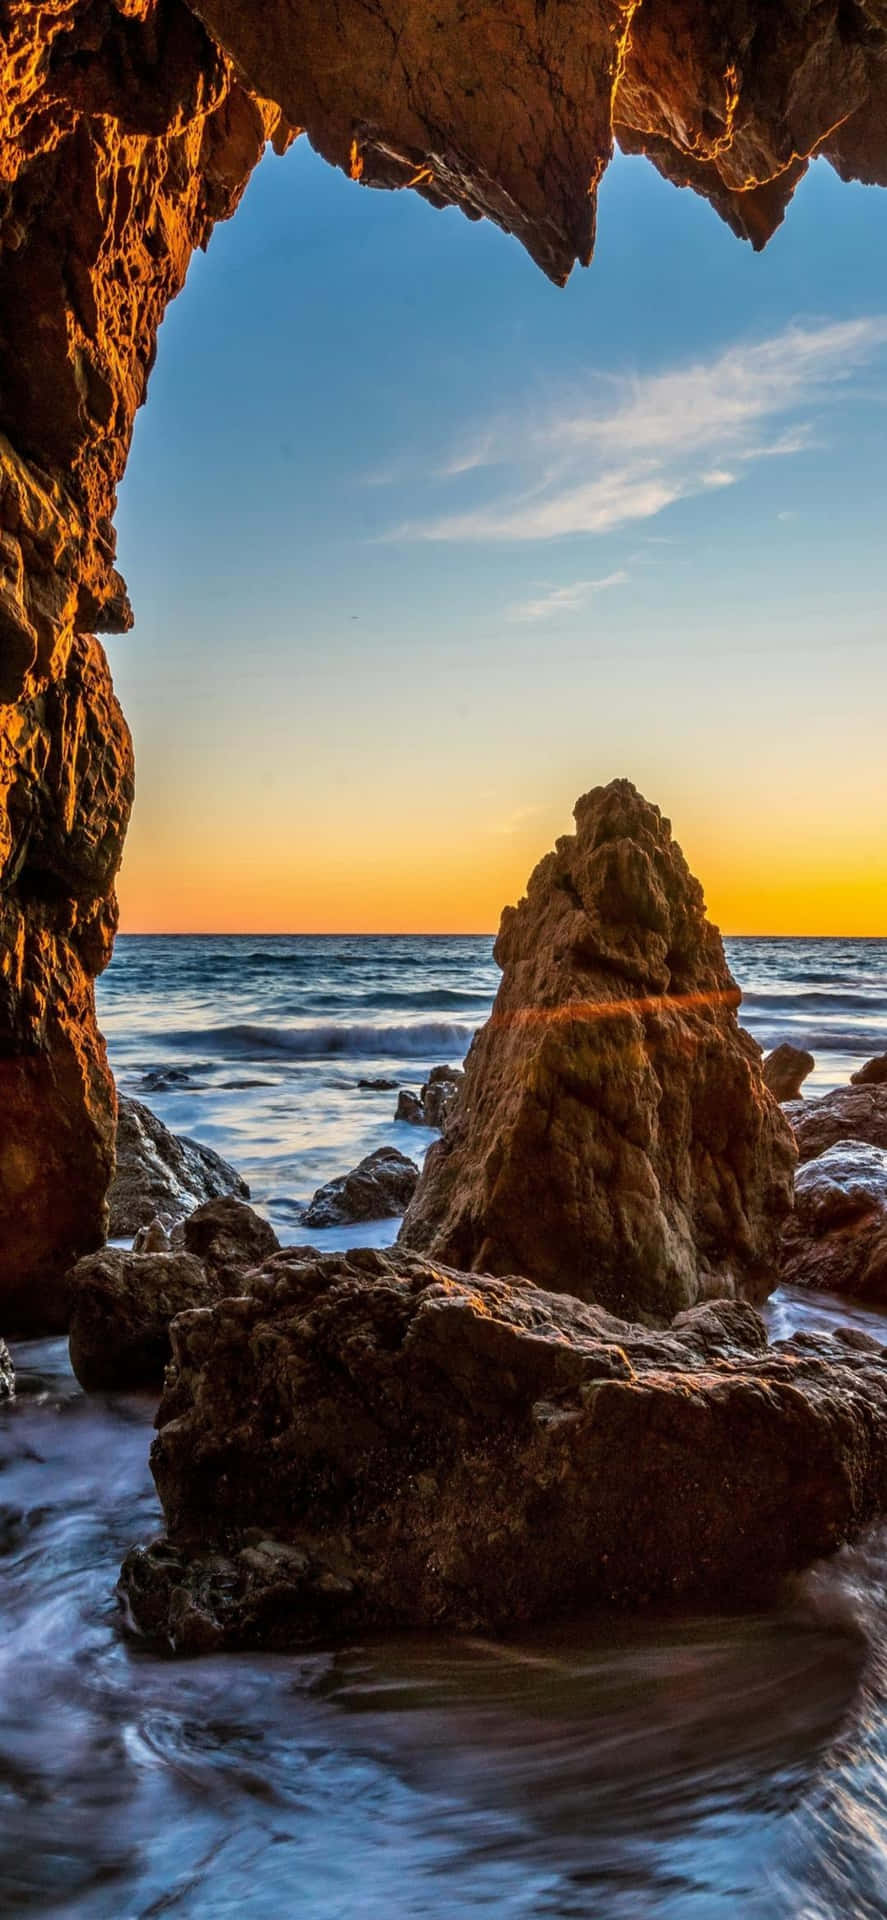 Enjoy Spectacular Views of Malibu with iPhone Xs